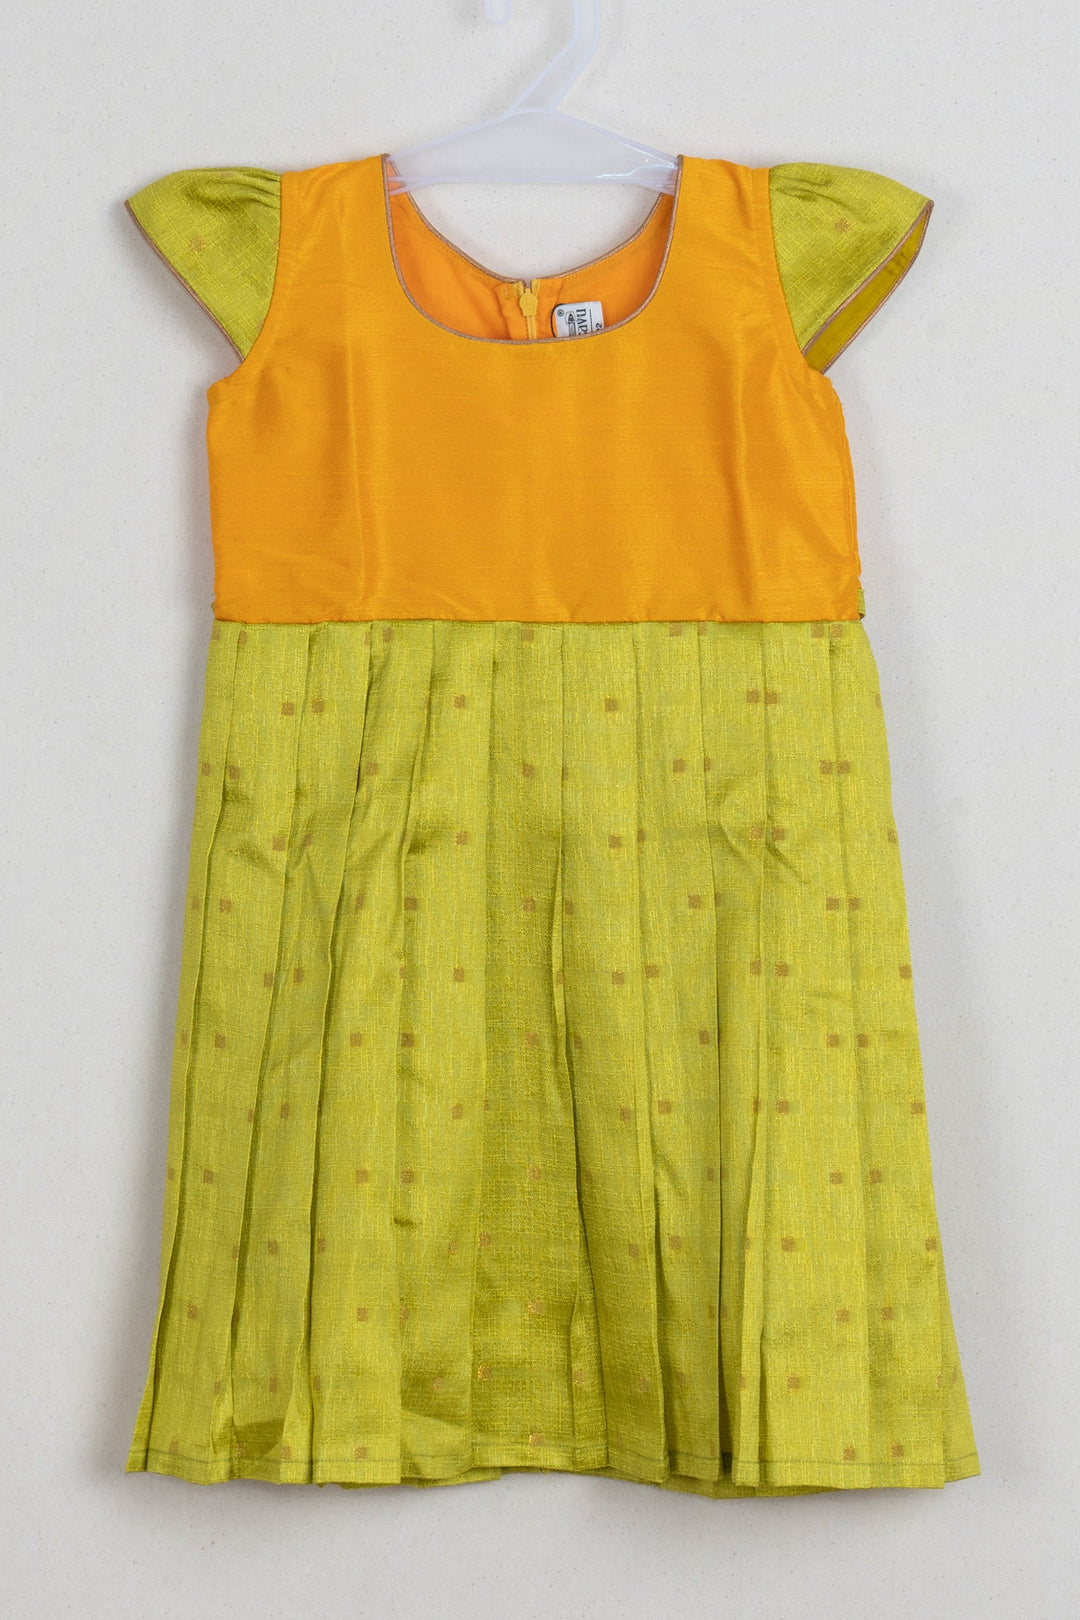 The Nesavu Silk Frock Enchanting Resham Weave Green Silk Attire for Girls with Vibrant Yellow Yoke and Elegant Pleats Nesavu 16 (1Y) / Yellow SF591-16 Green Silk Frock For Girls | Traditional Indian wear | The Nesavu